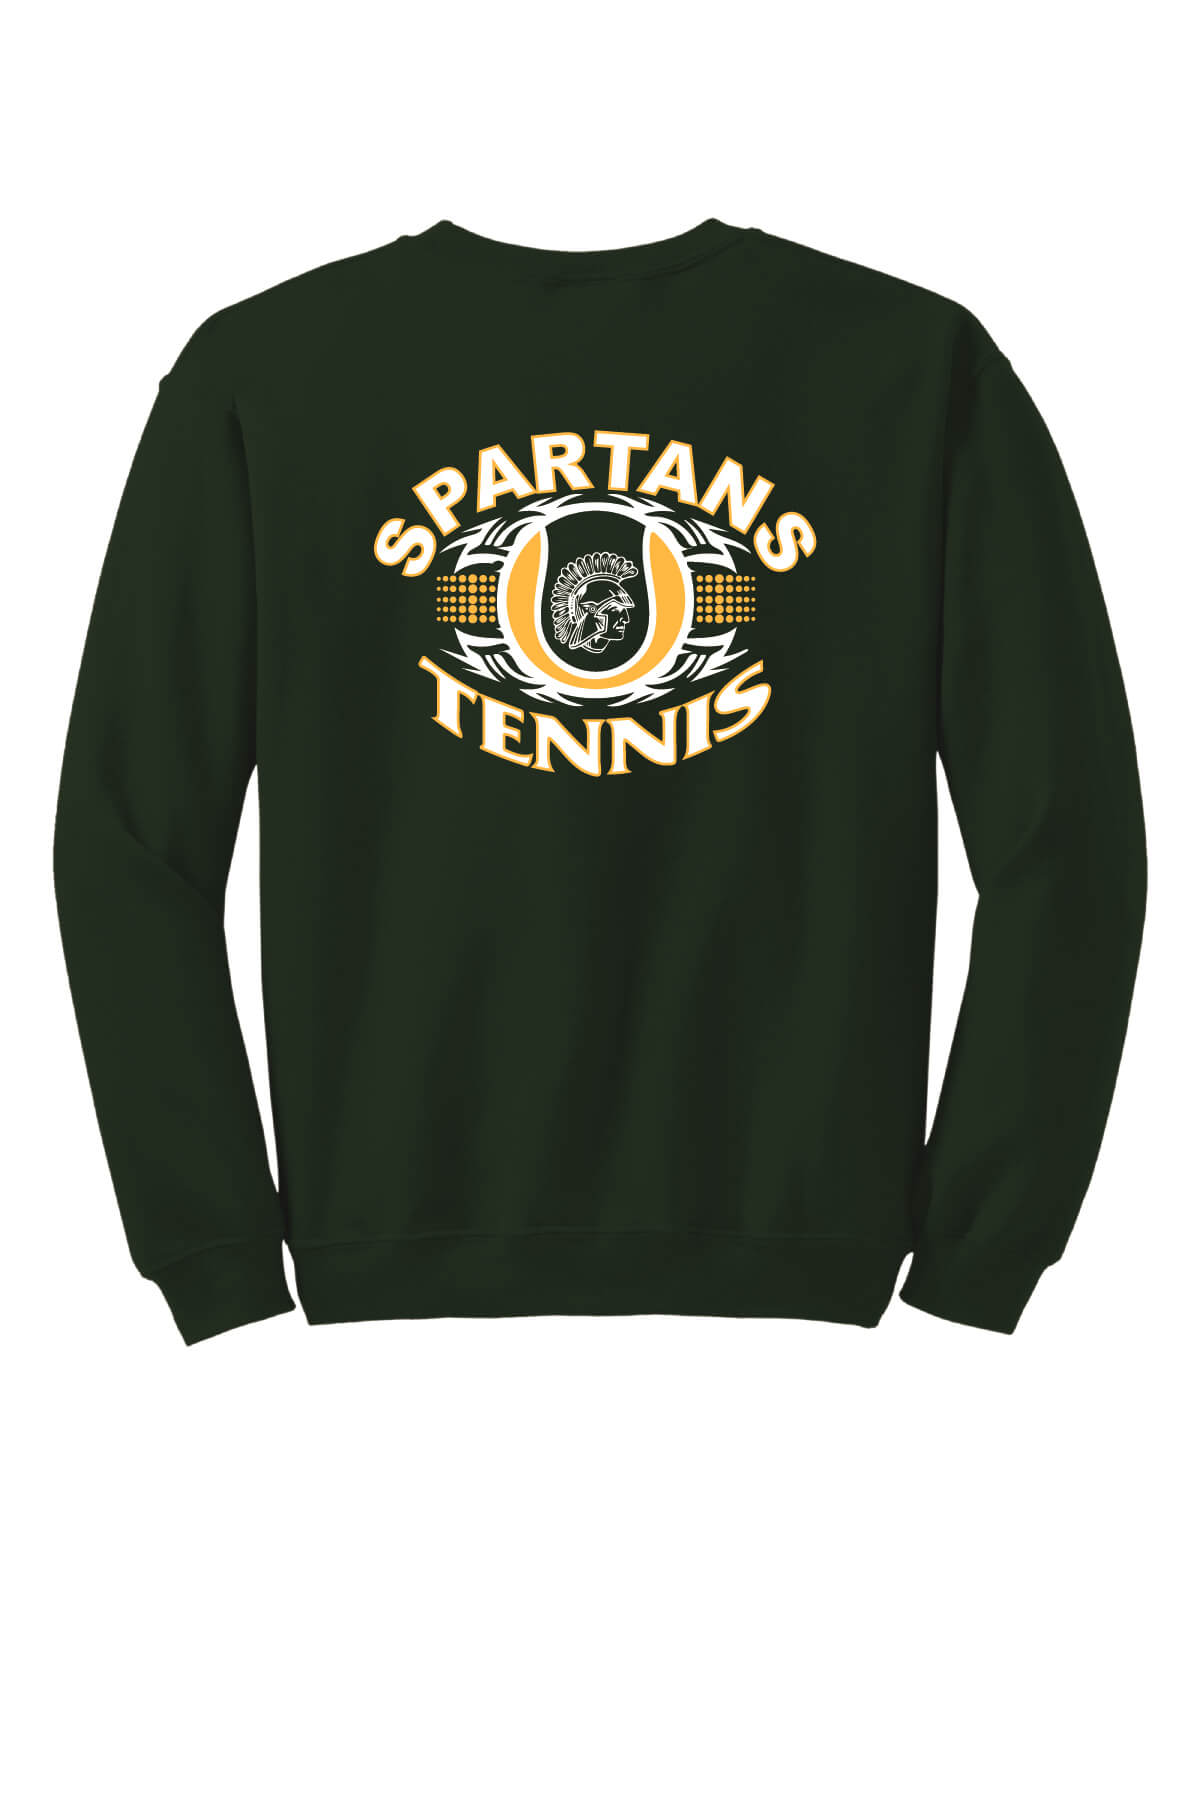 Spartans Crewneck Sweatshirt back-green